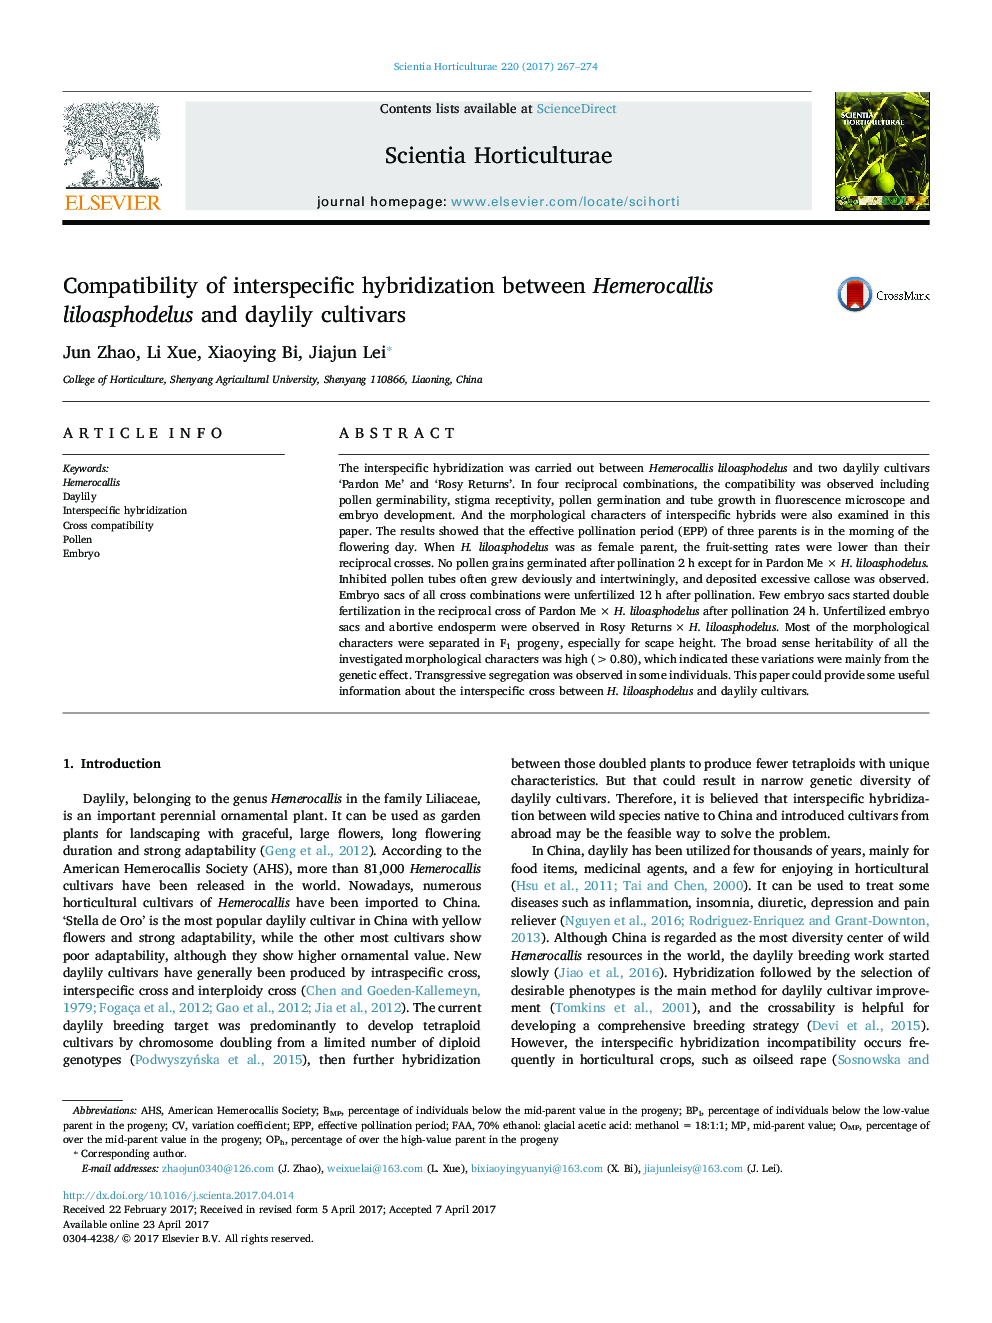 Compatibility of interspecific hybridization between Hemerocallis liloasphodelus and daylily cultivars